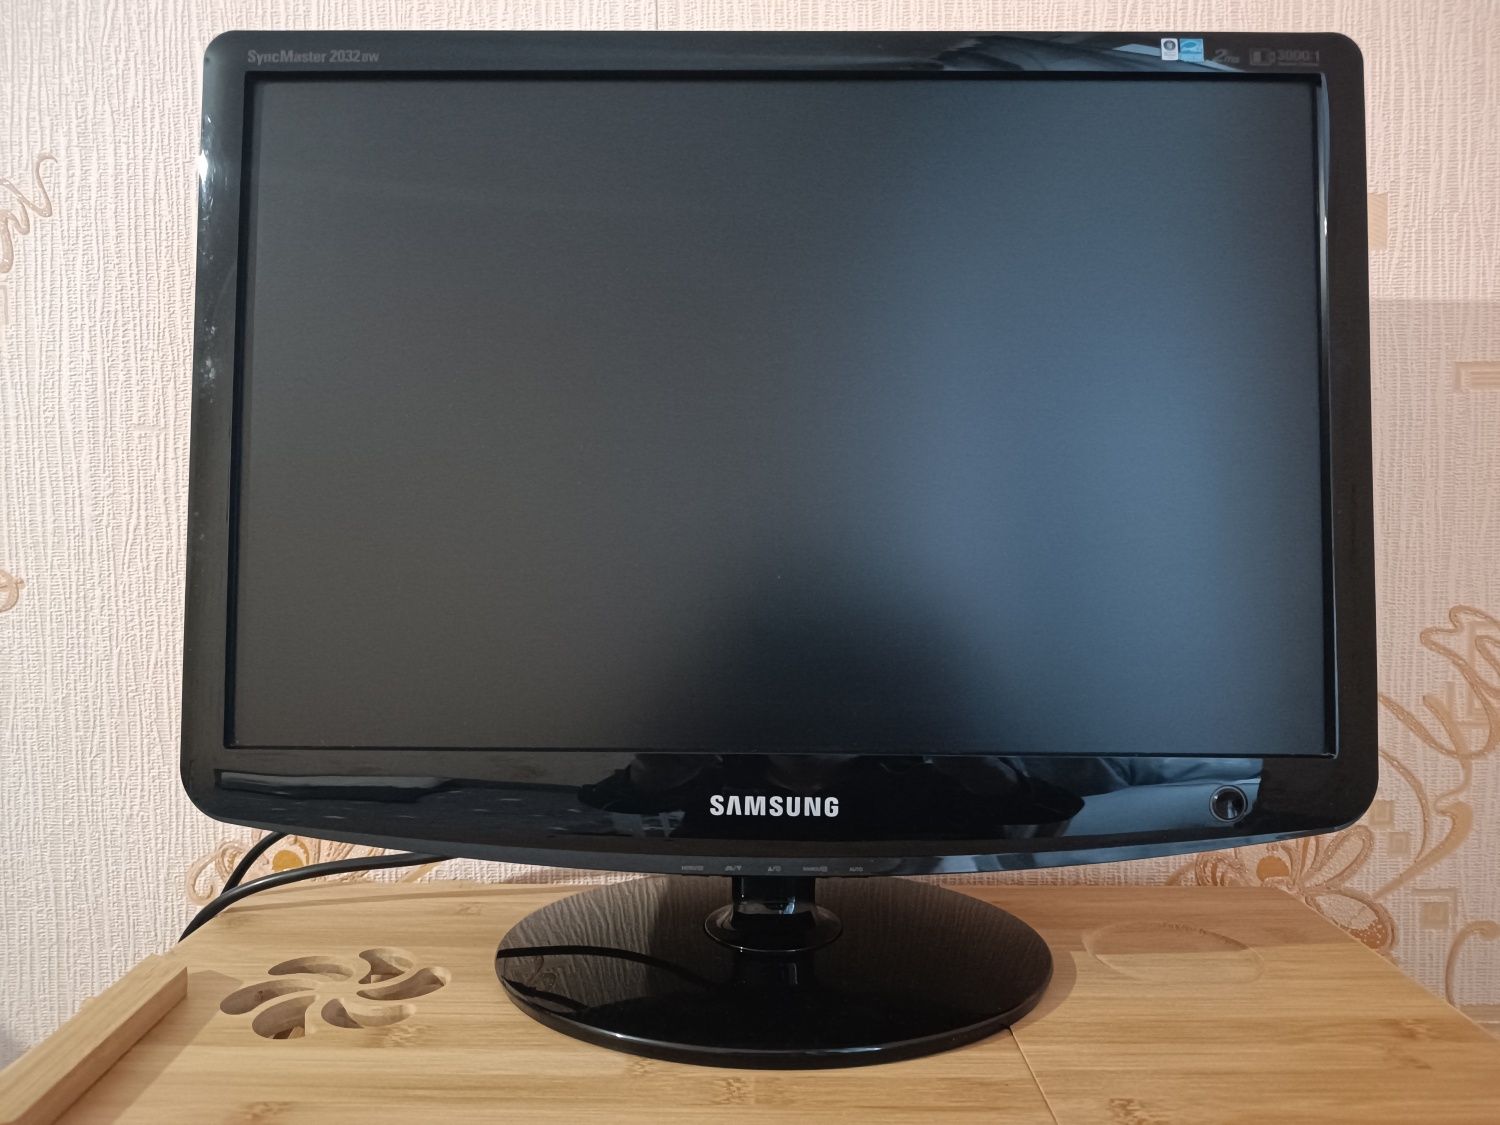 Монитор Samsung 2032BW, 20 дюймов, 1680x1050 (под YouTube на фоне)